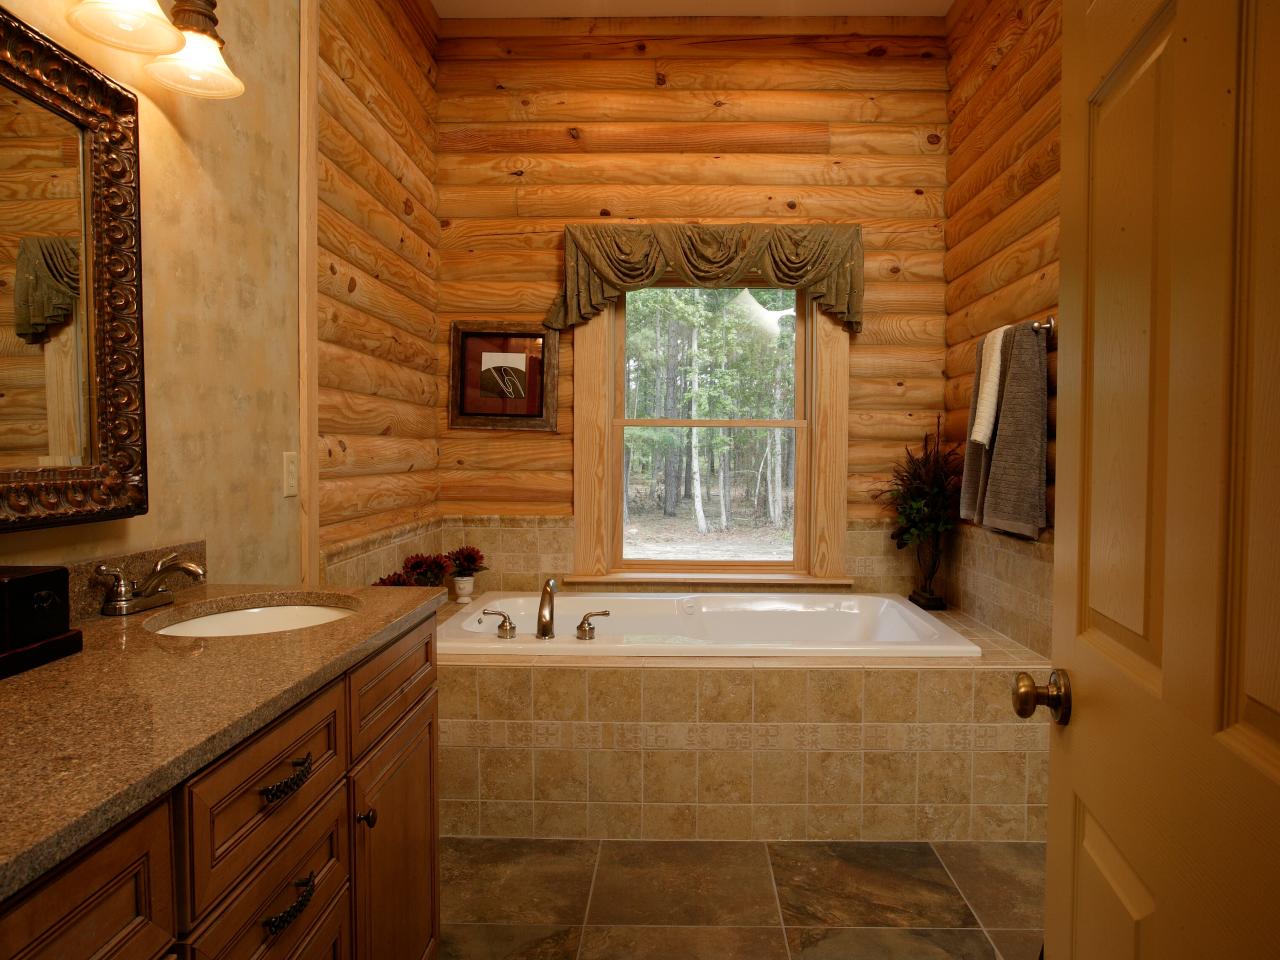 Cabin Bathroom Ideas Log Cabin Bathrooms Rustic Bathroom And Decor